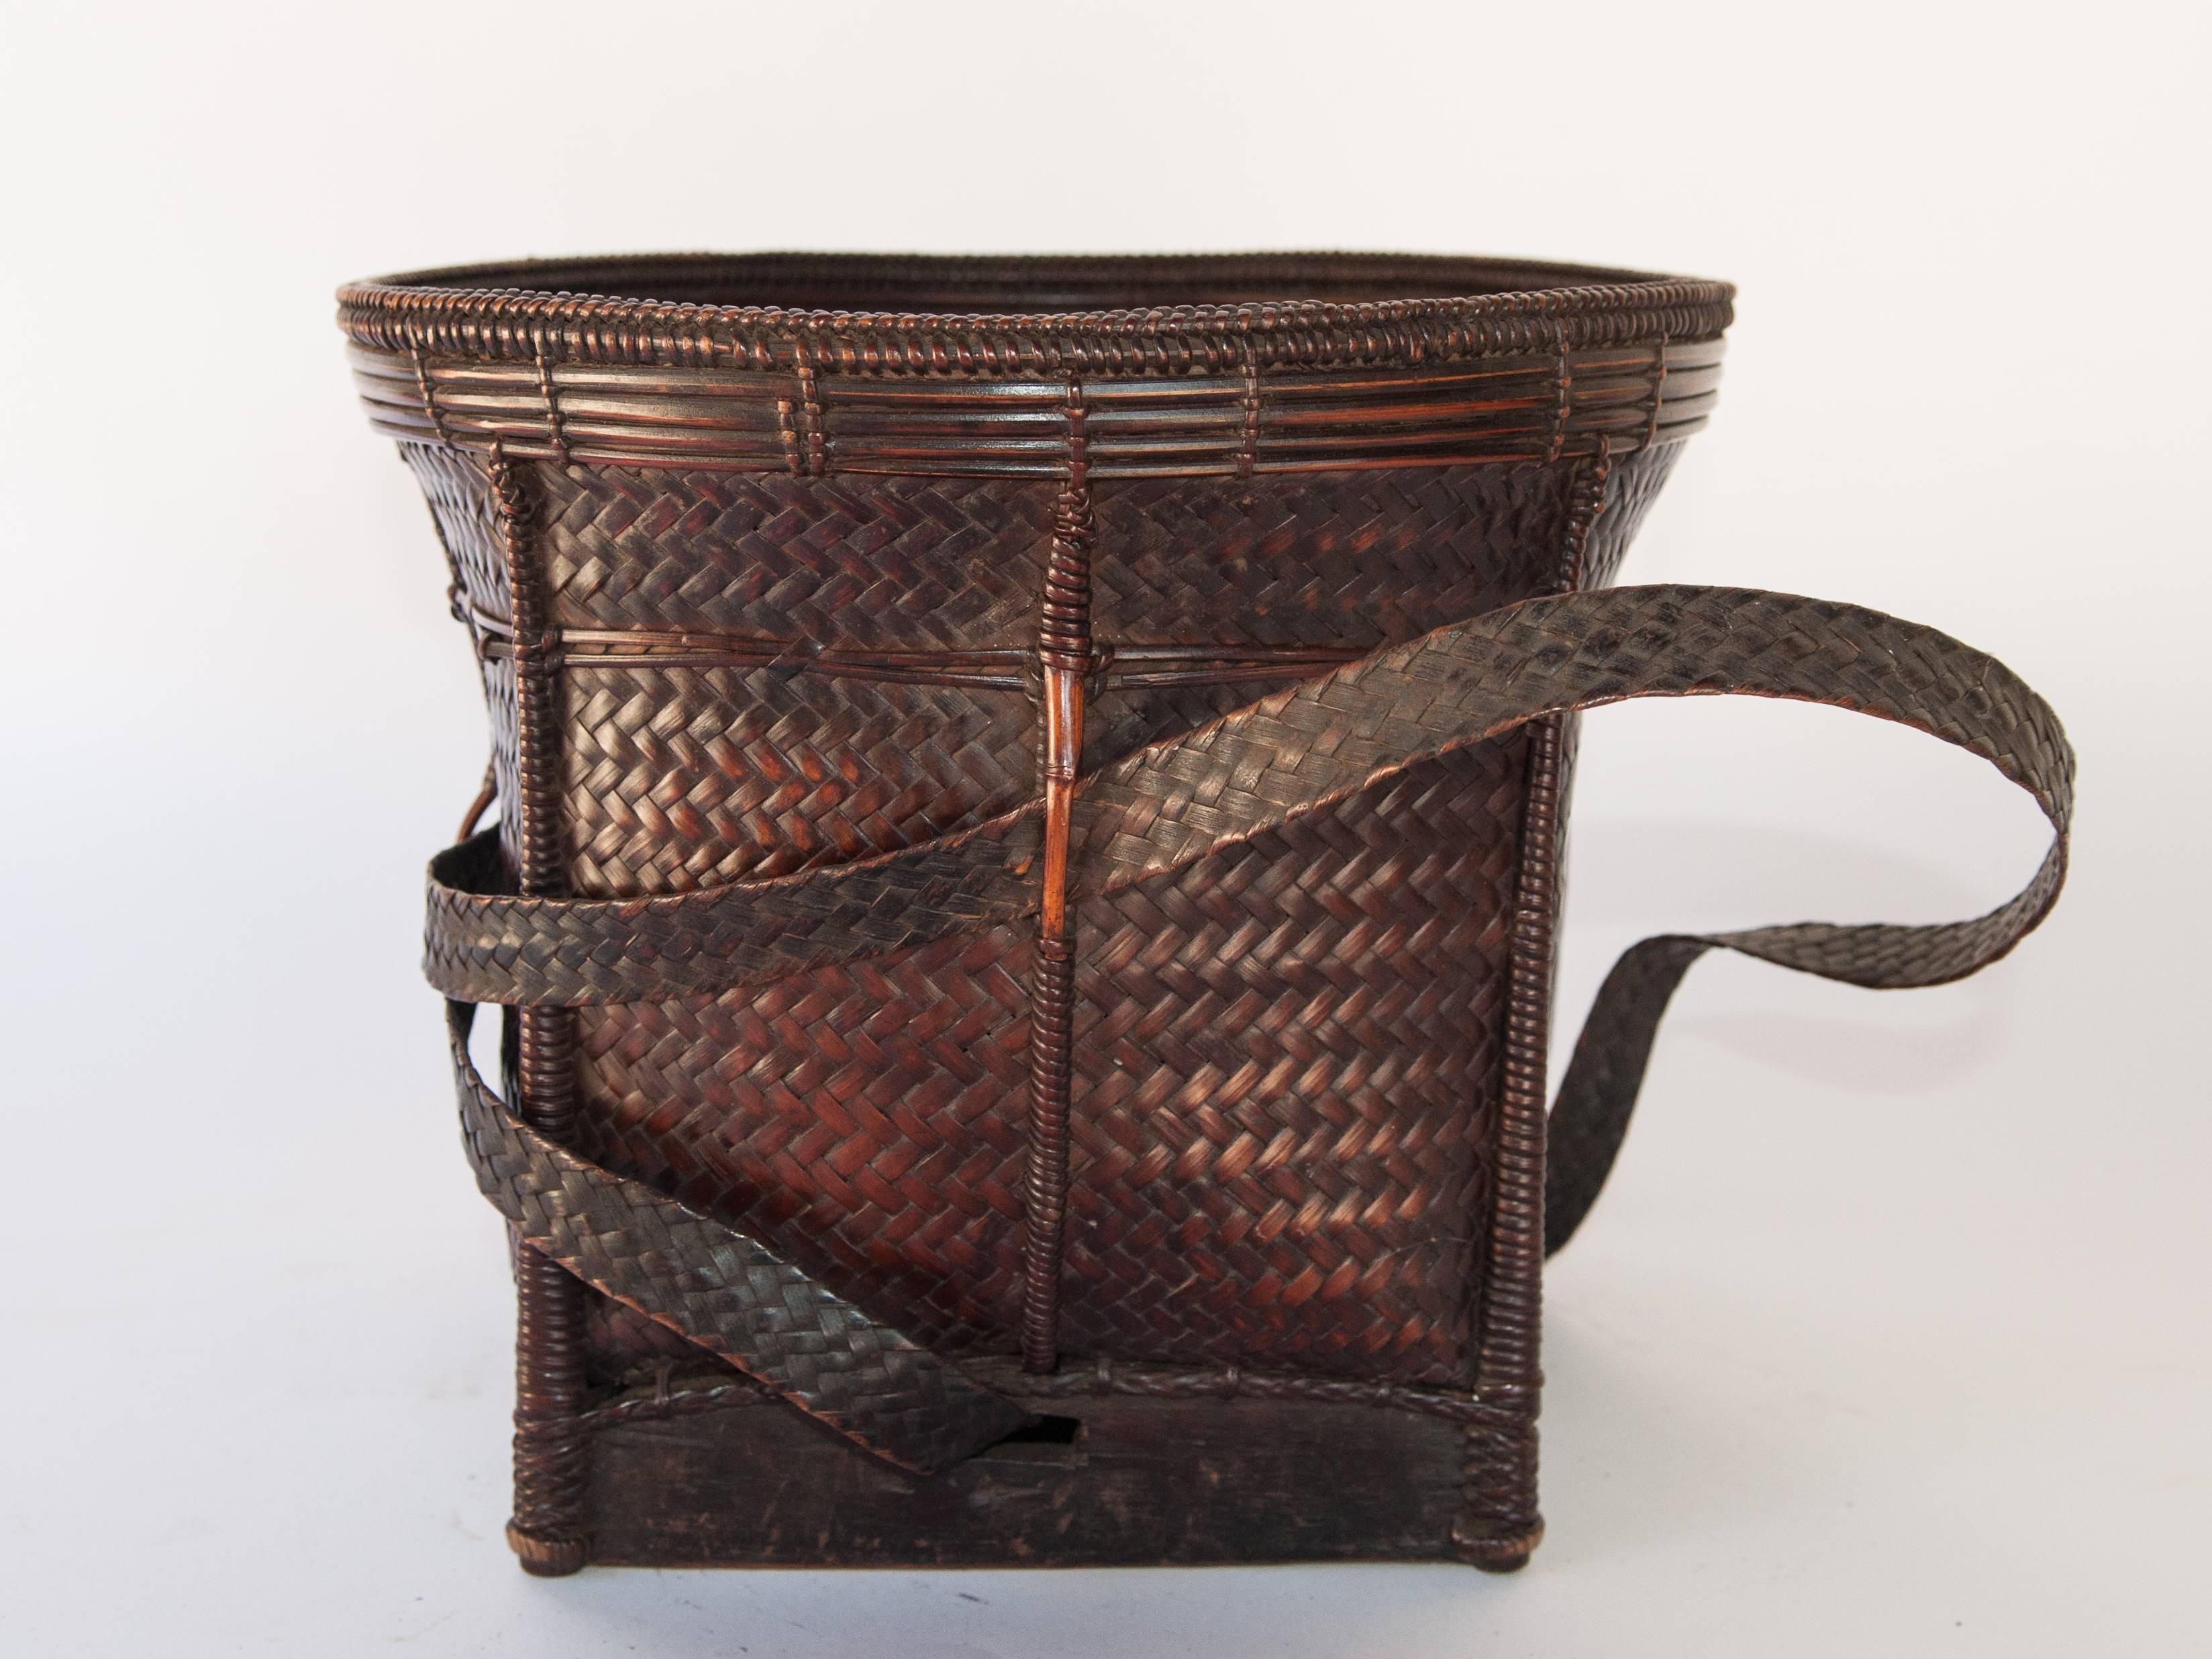 Tribal Vintage Collecting Basket, Ata Pue, Laos, Mid-20th Century, Bamboo, Rattan